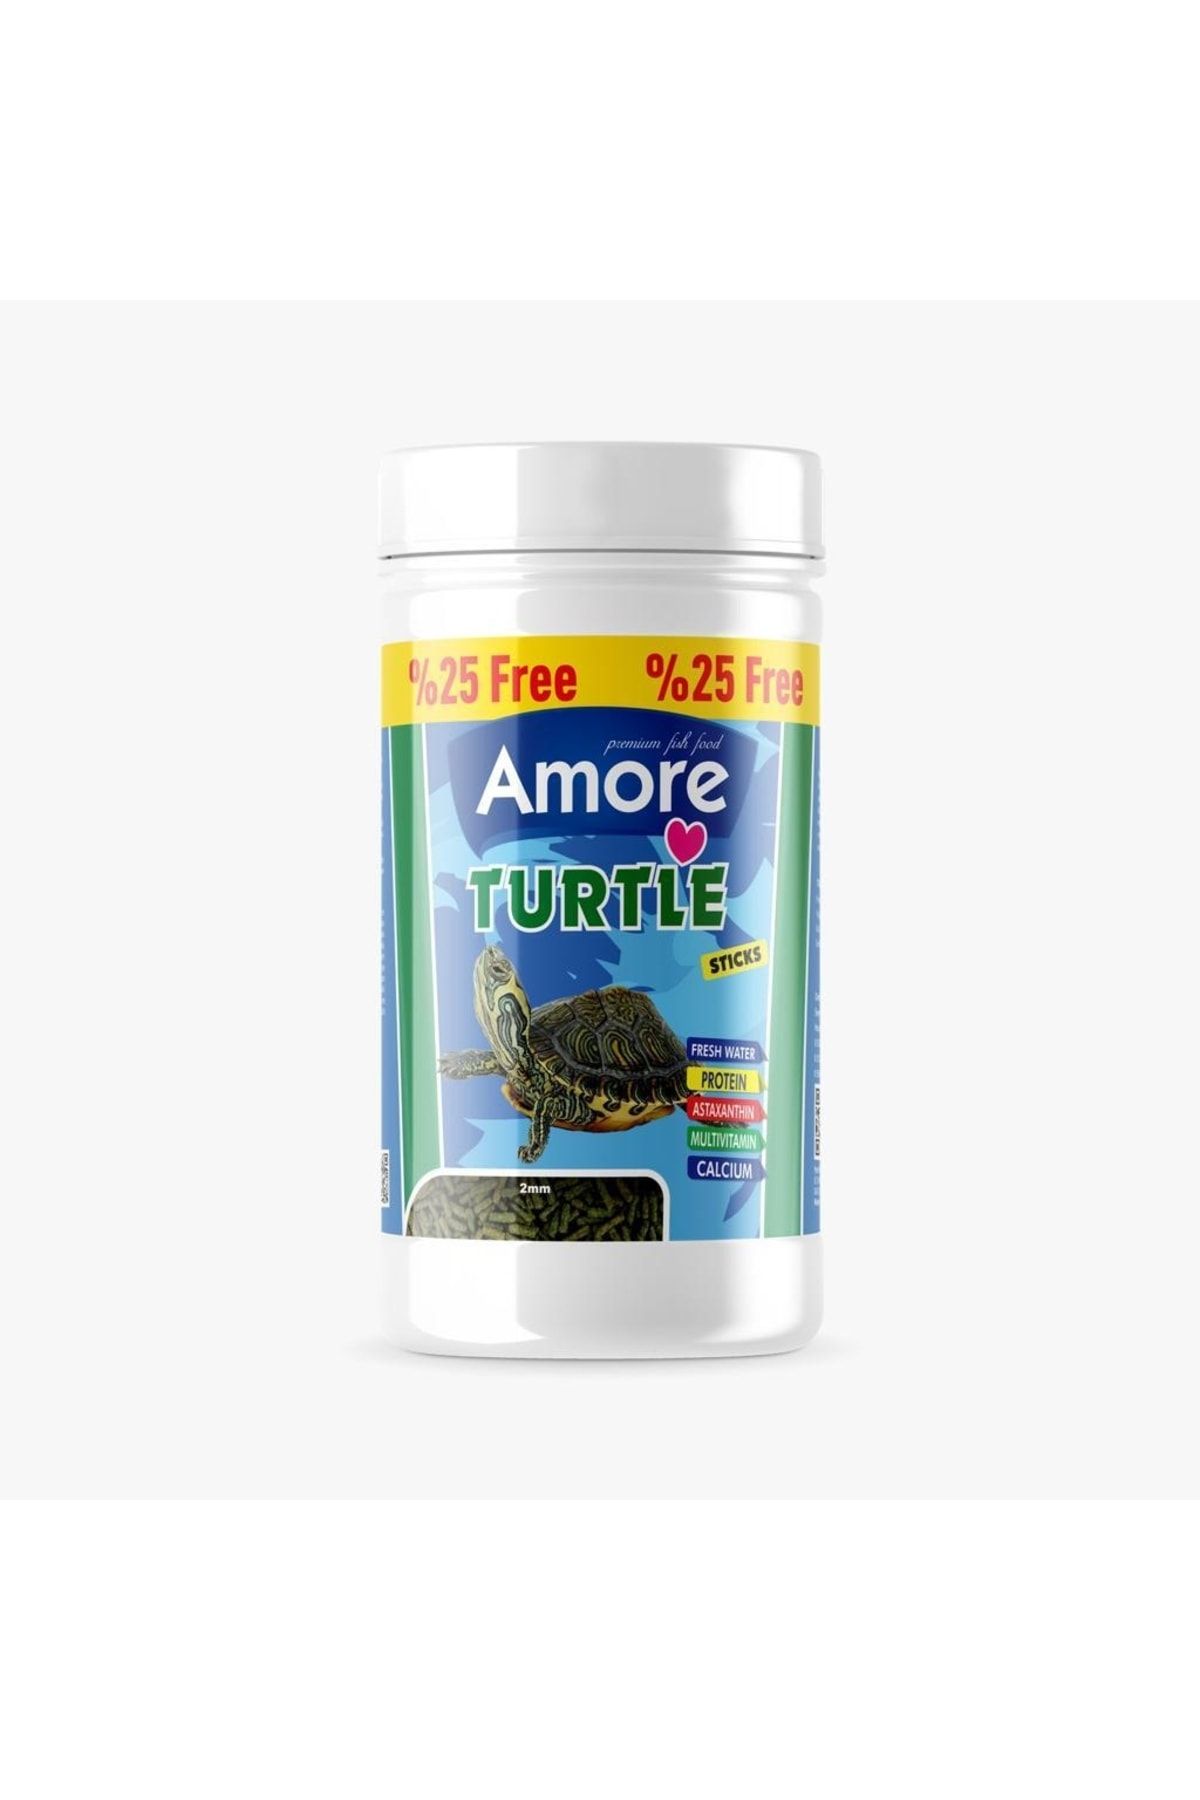 Amore Turtle Green Calcium Sticks 2x125 Ml Su Kaplumbagasi Yemi, Clear, Vitamin Seti